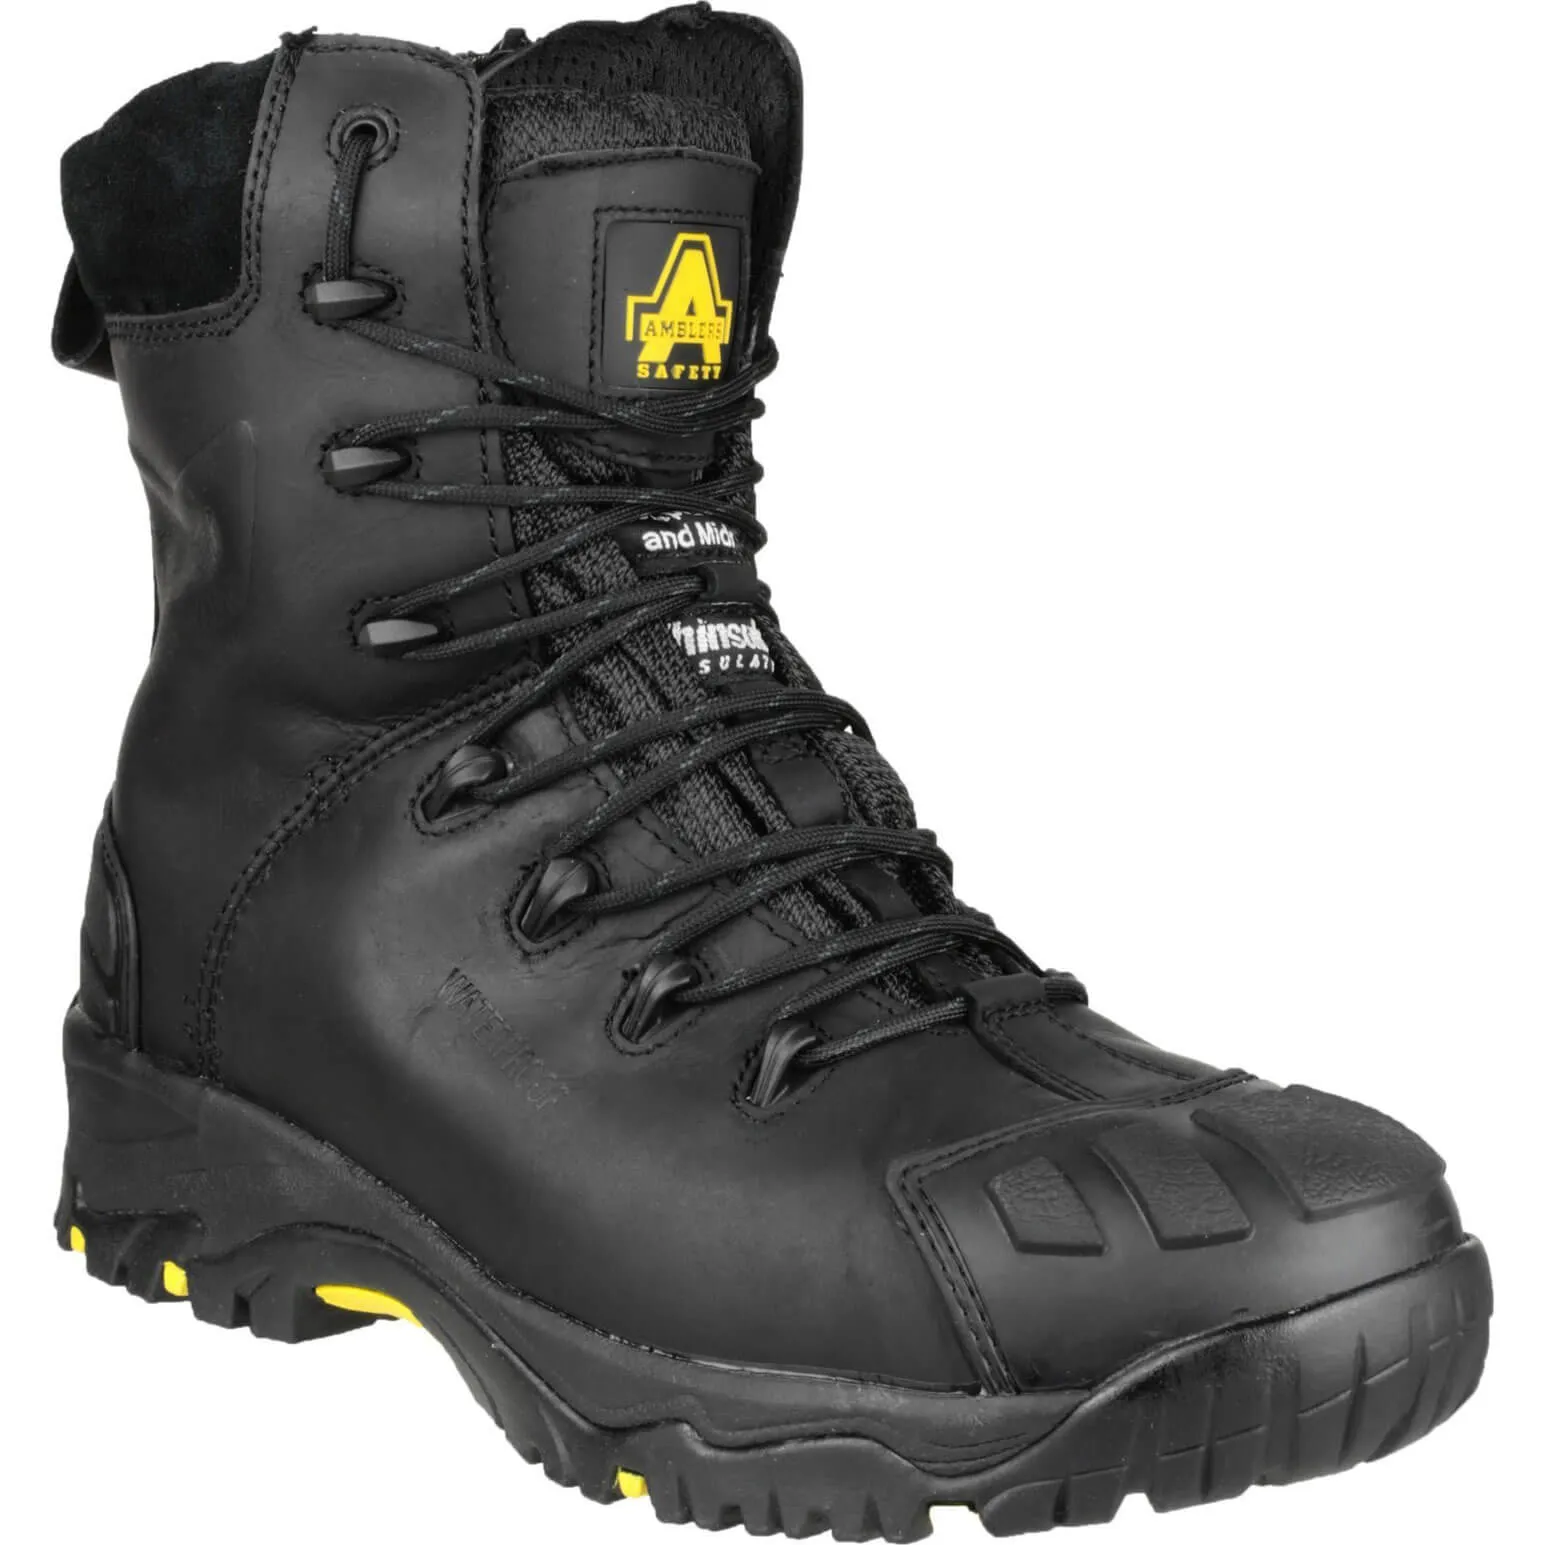 Amblers Mens Safety FS999 Hi Leg Composite Safety Boots - Black, Size 10